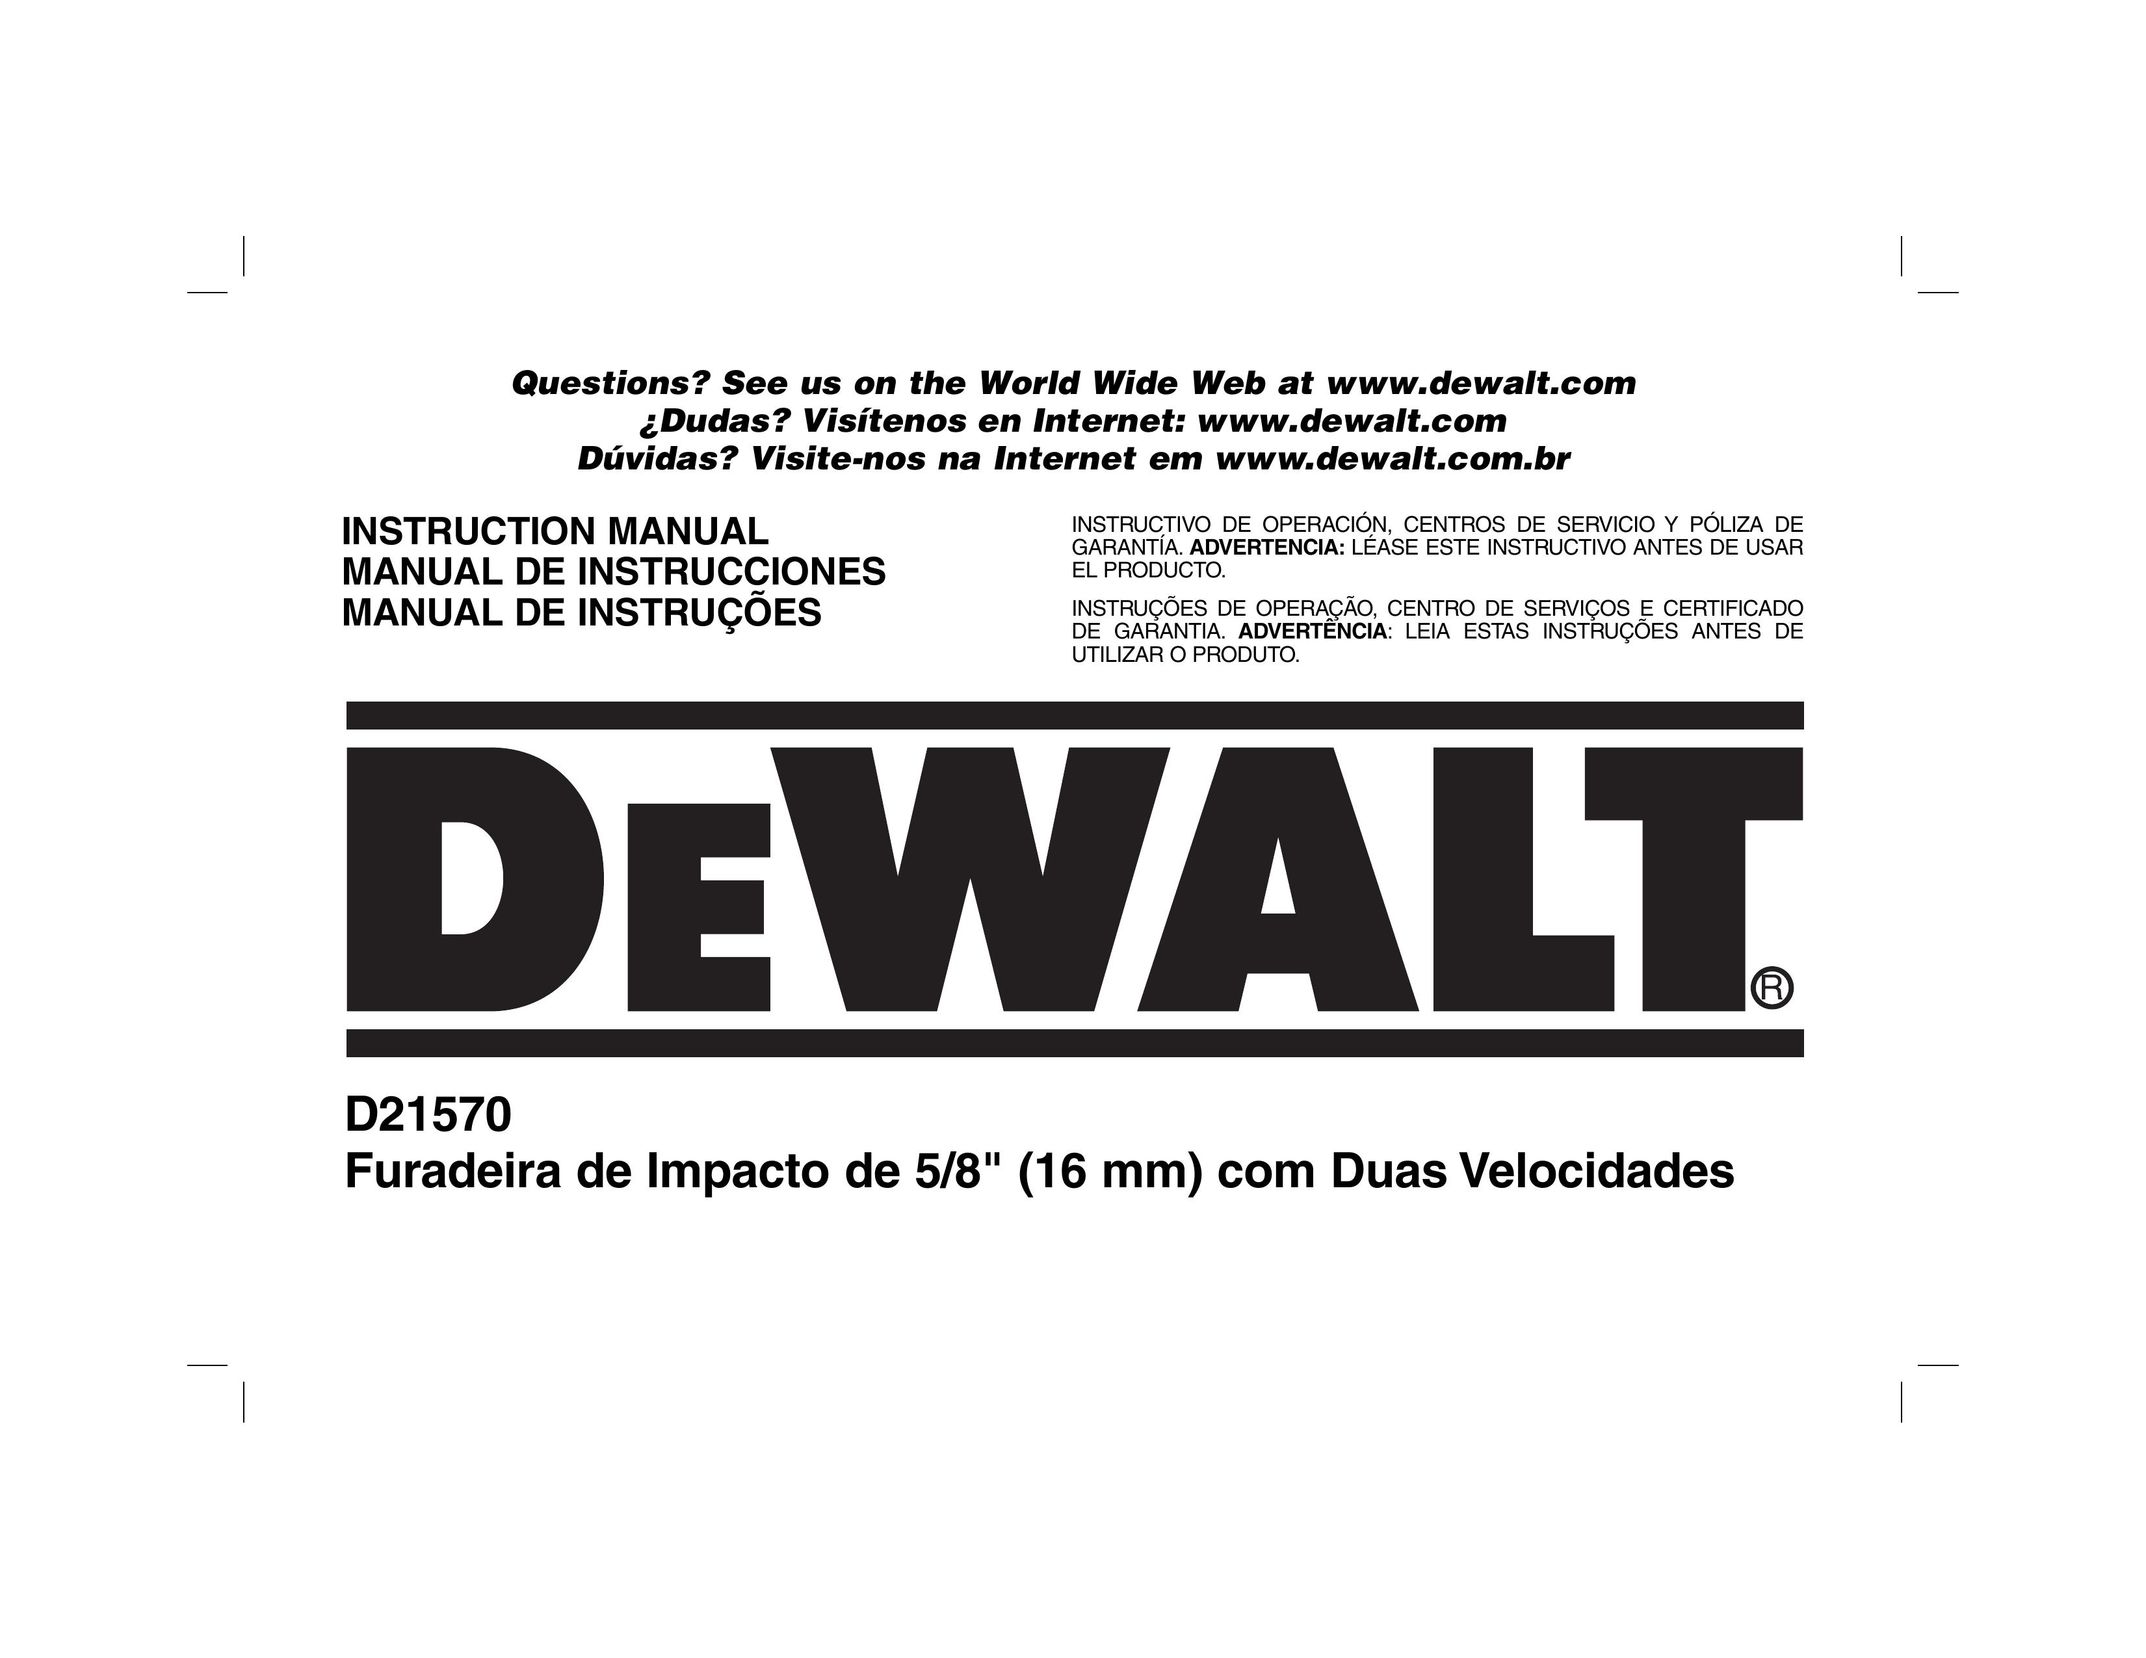 DeWalt D21570 Drill User Manual